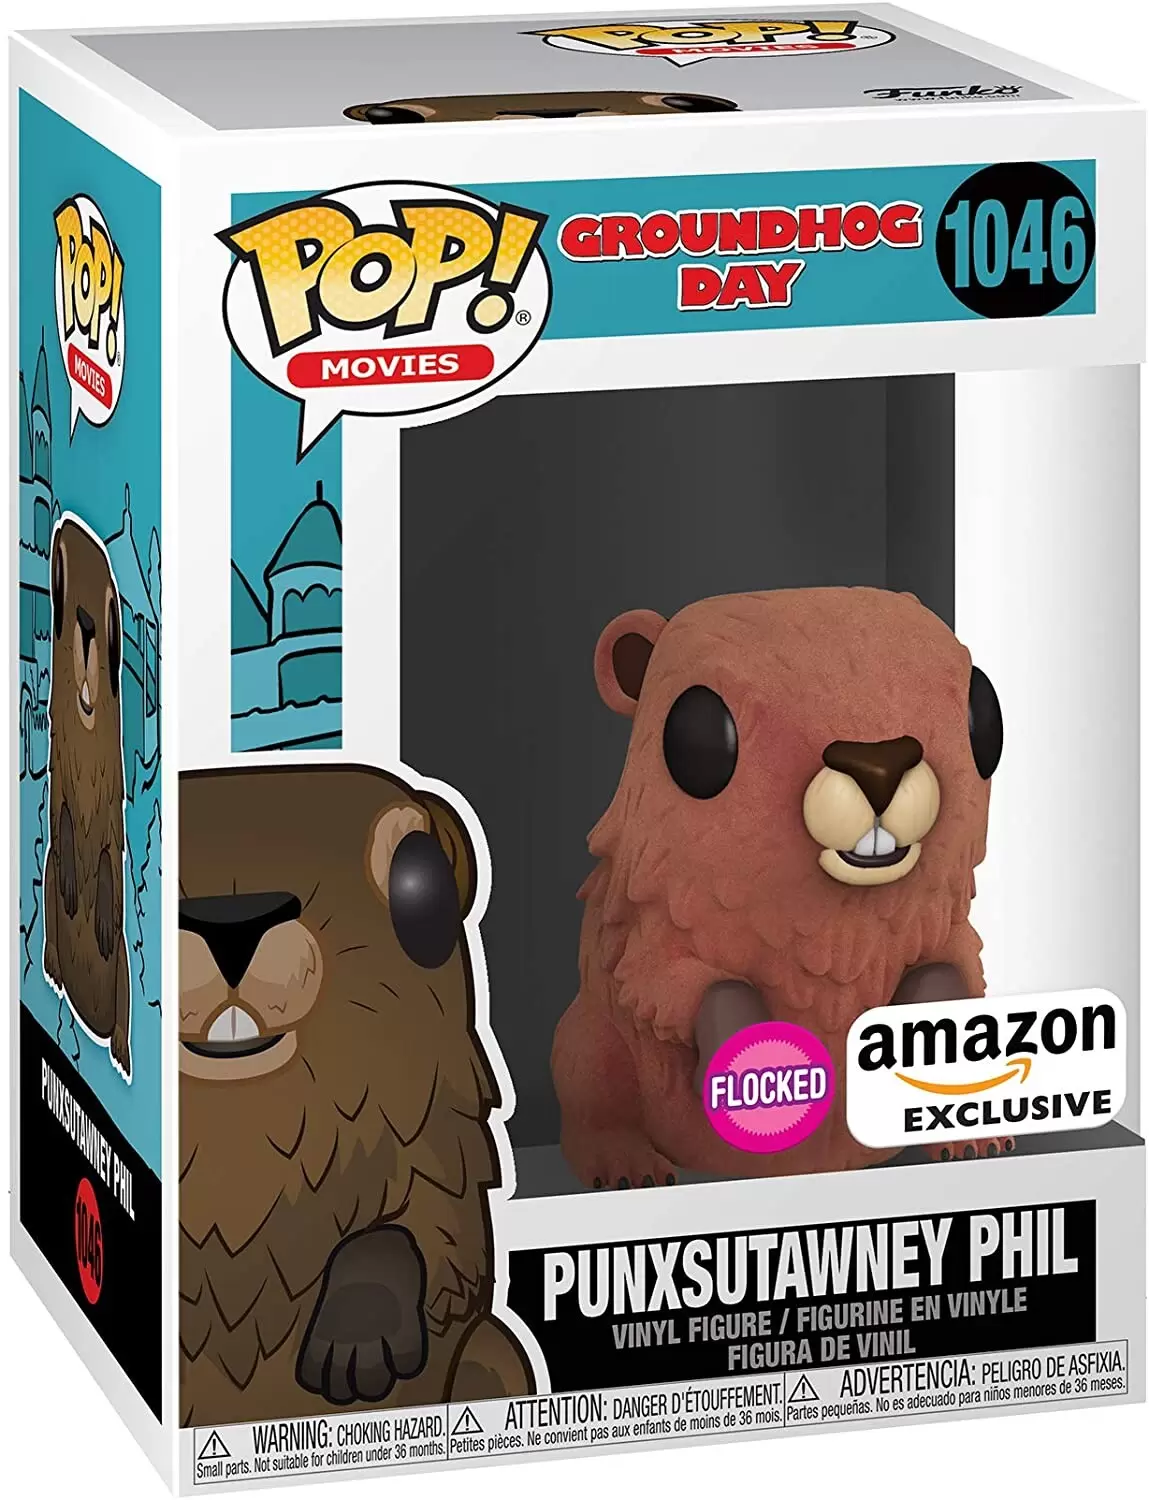 POP! Movies - Groundhog Day - Punxsutawney Phil Flocked